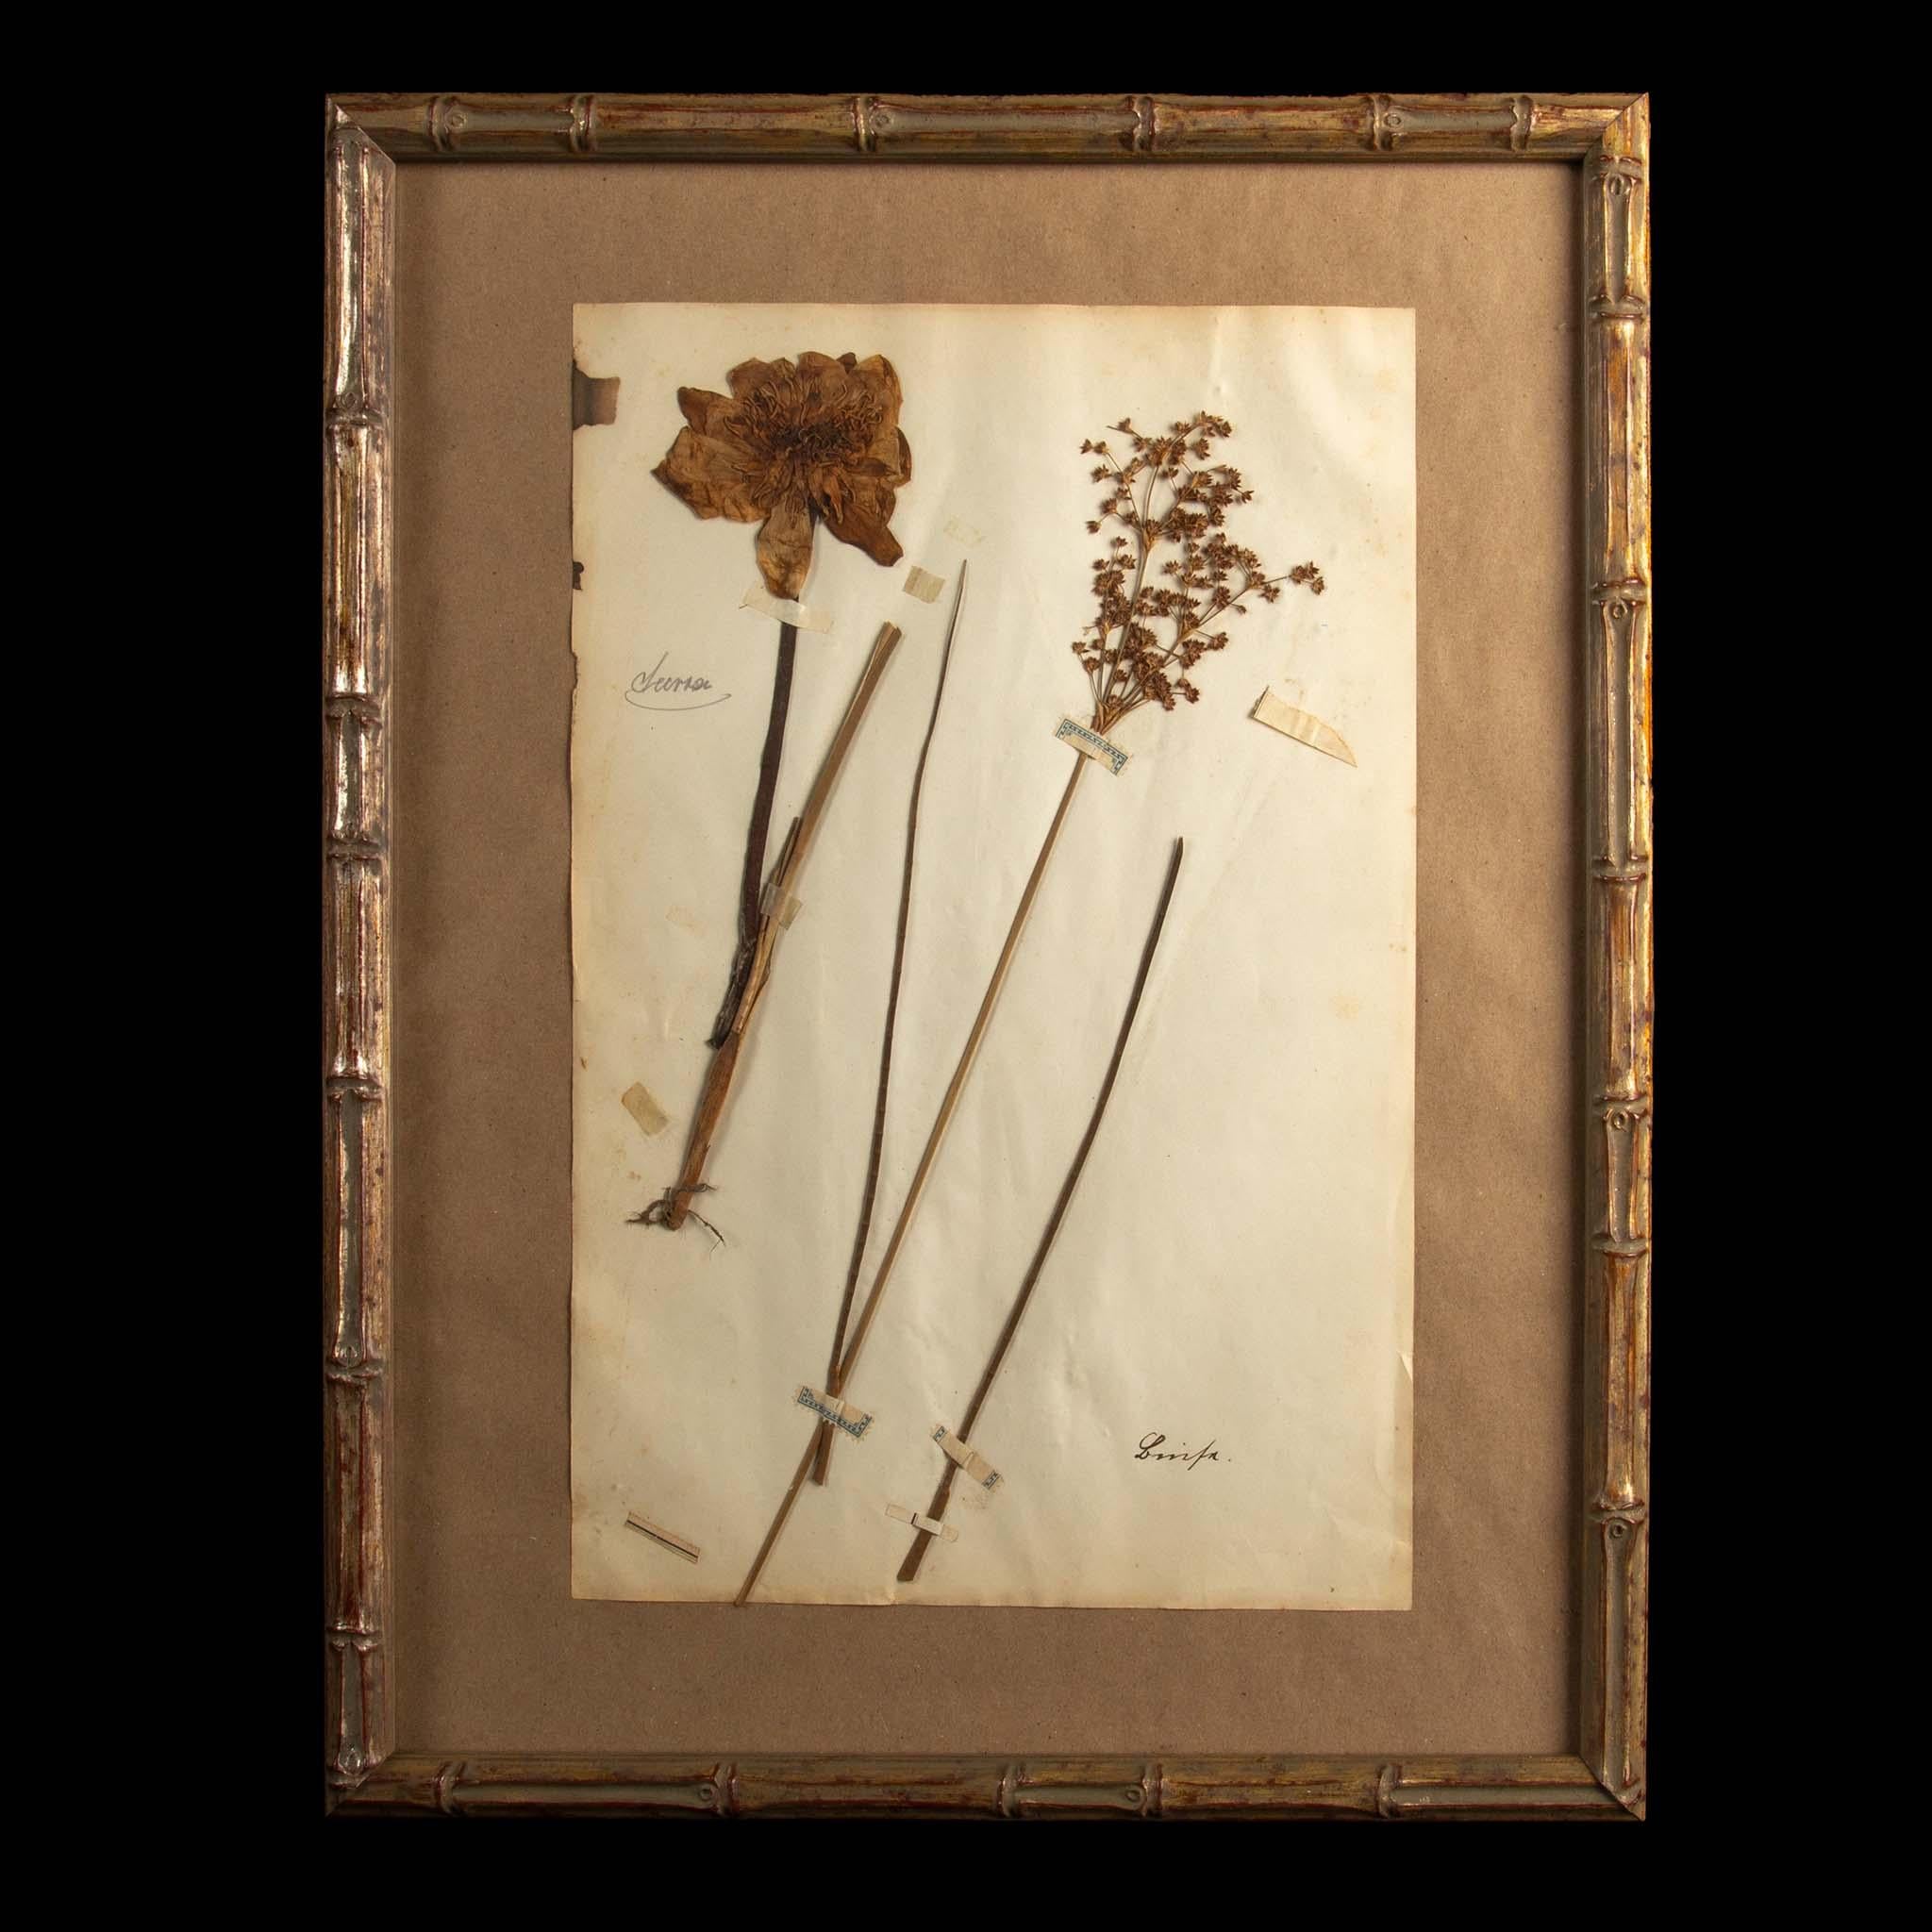 Wood Gilt Framed Herbier Botanical Specimens from the 19th Century For Sale